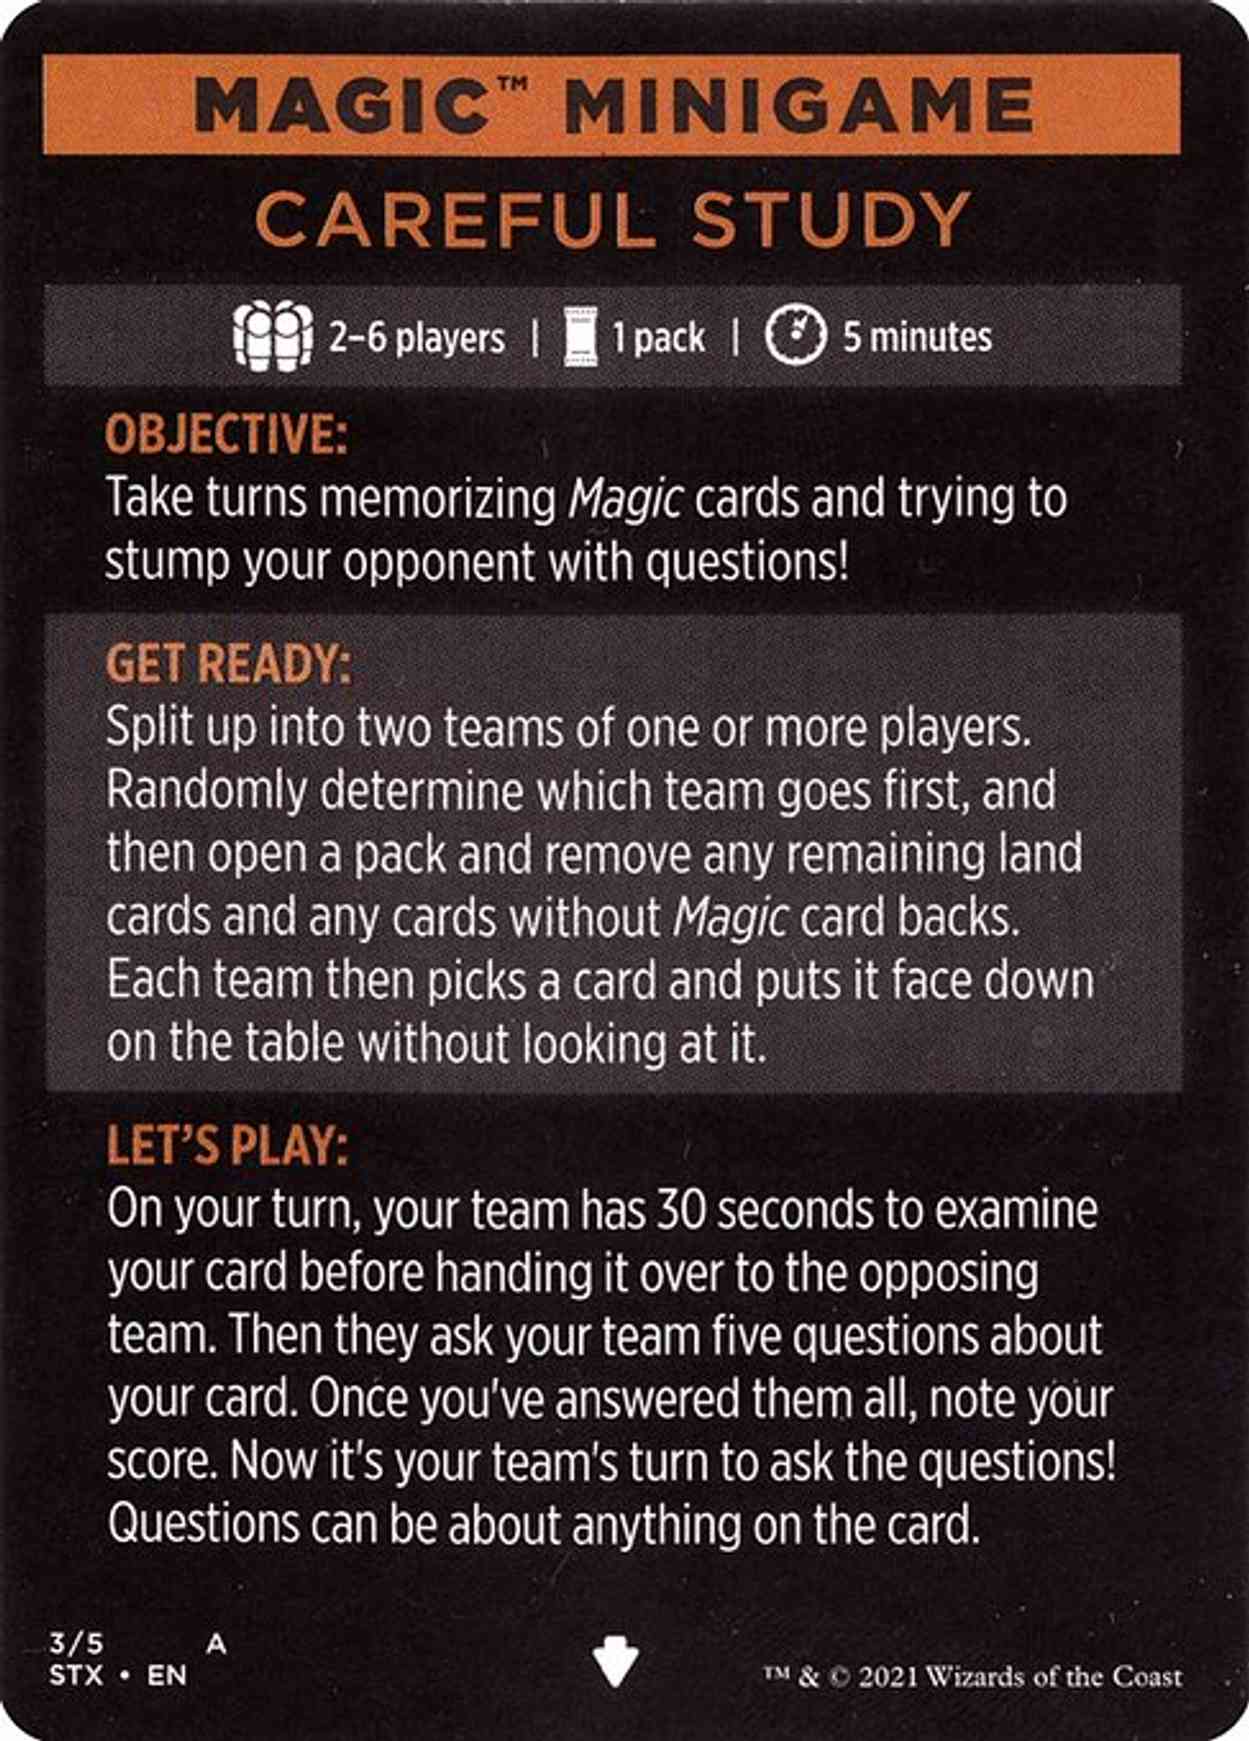 Magic Minigame: Careful Study magic card front